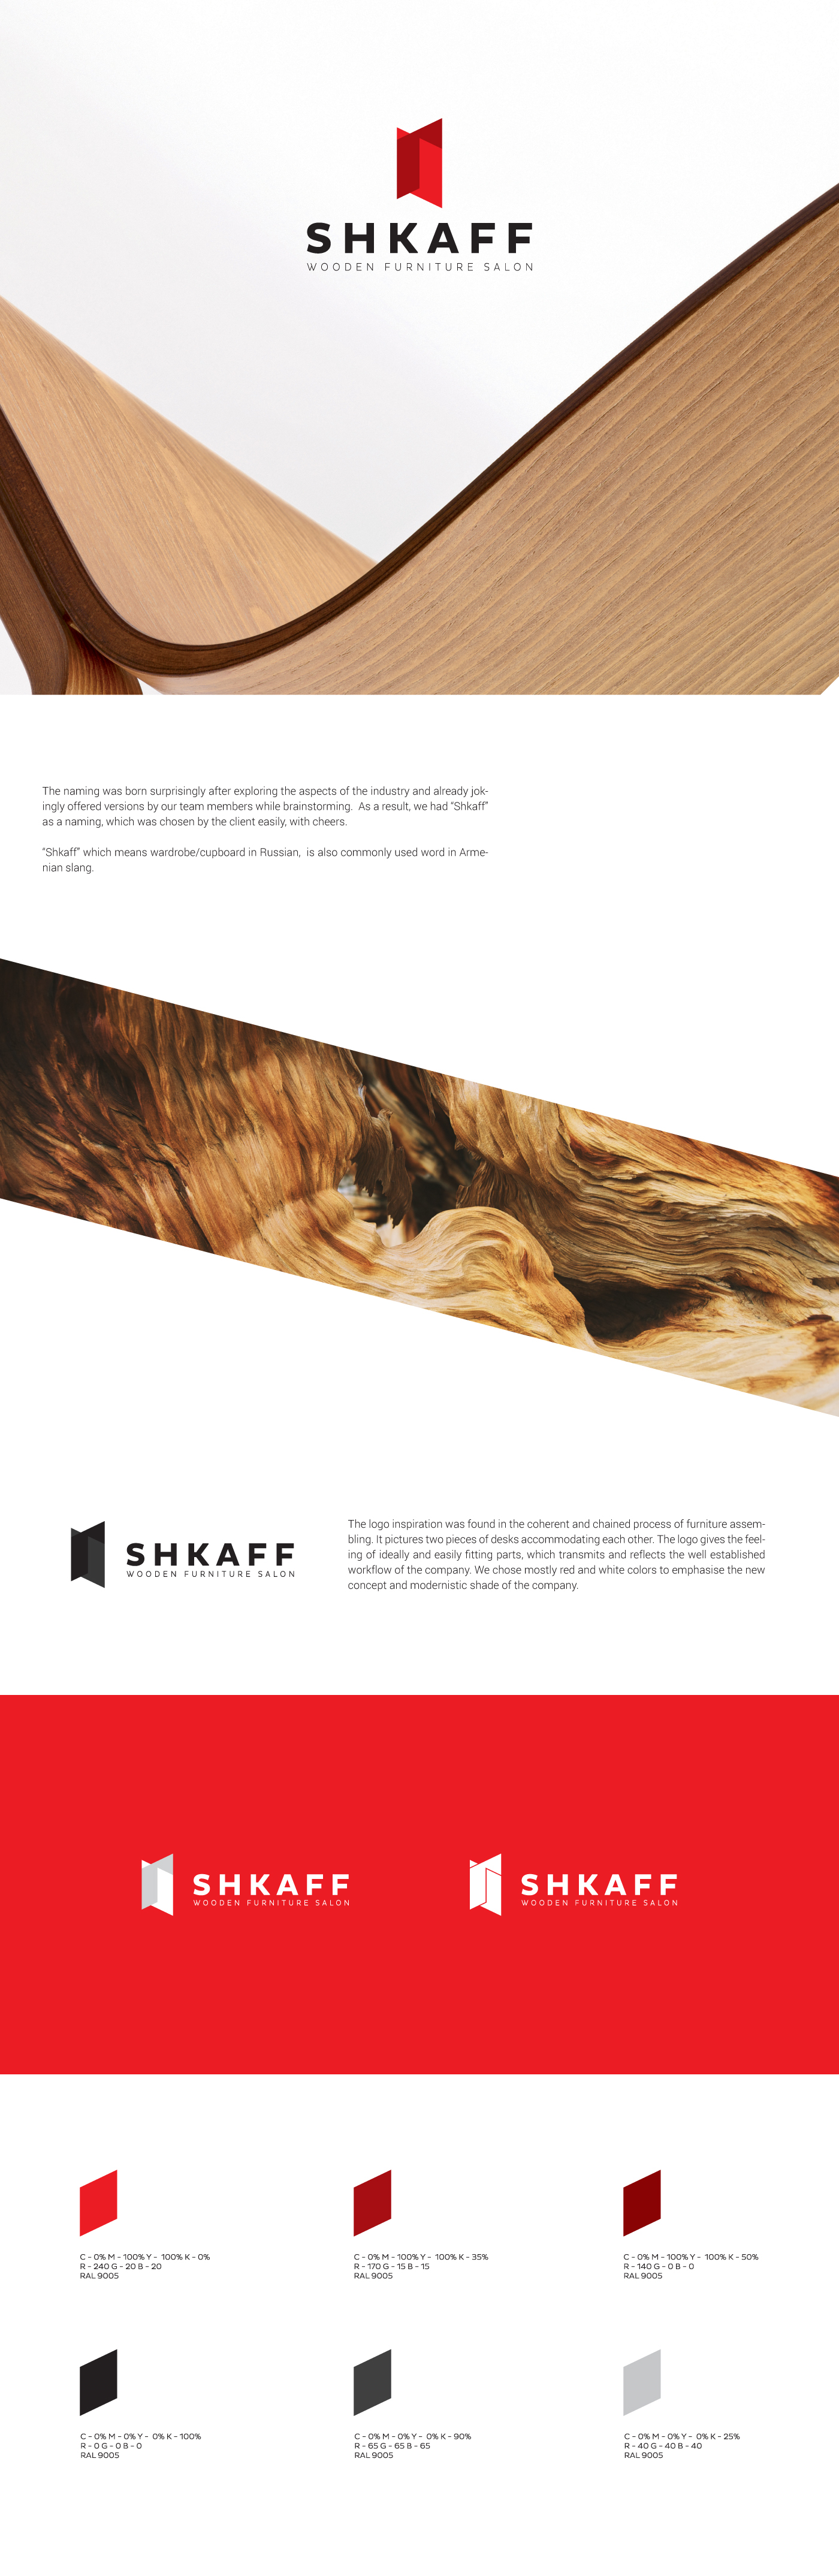 shkaff logo furniture wood modern red cupboard shop salon Minimalism